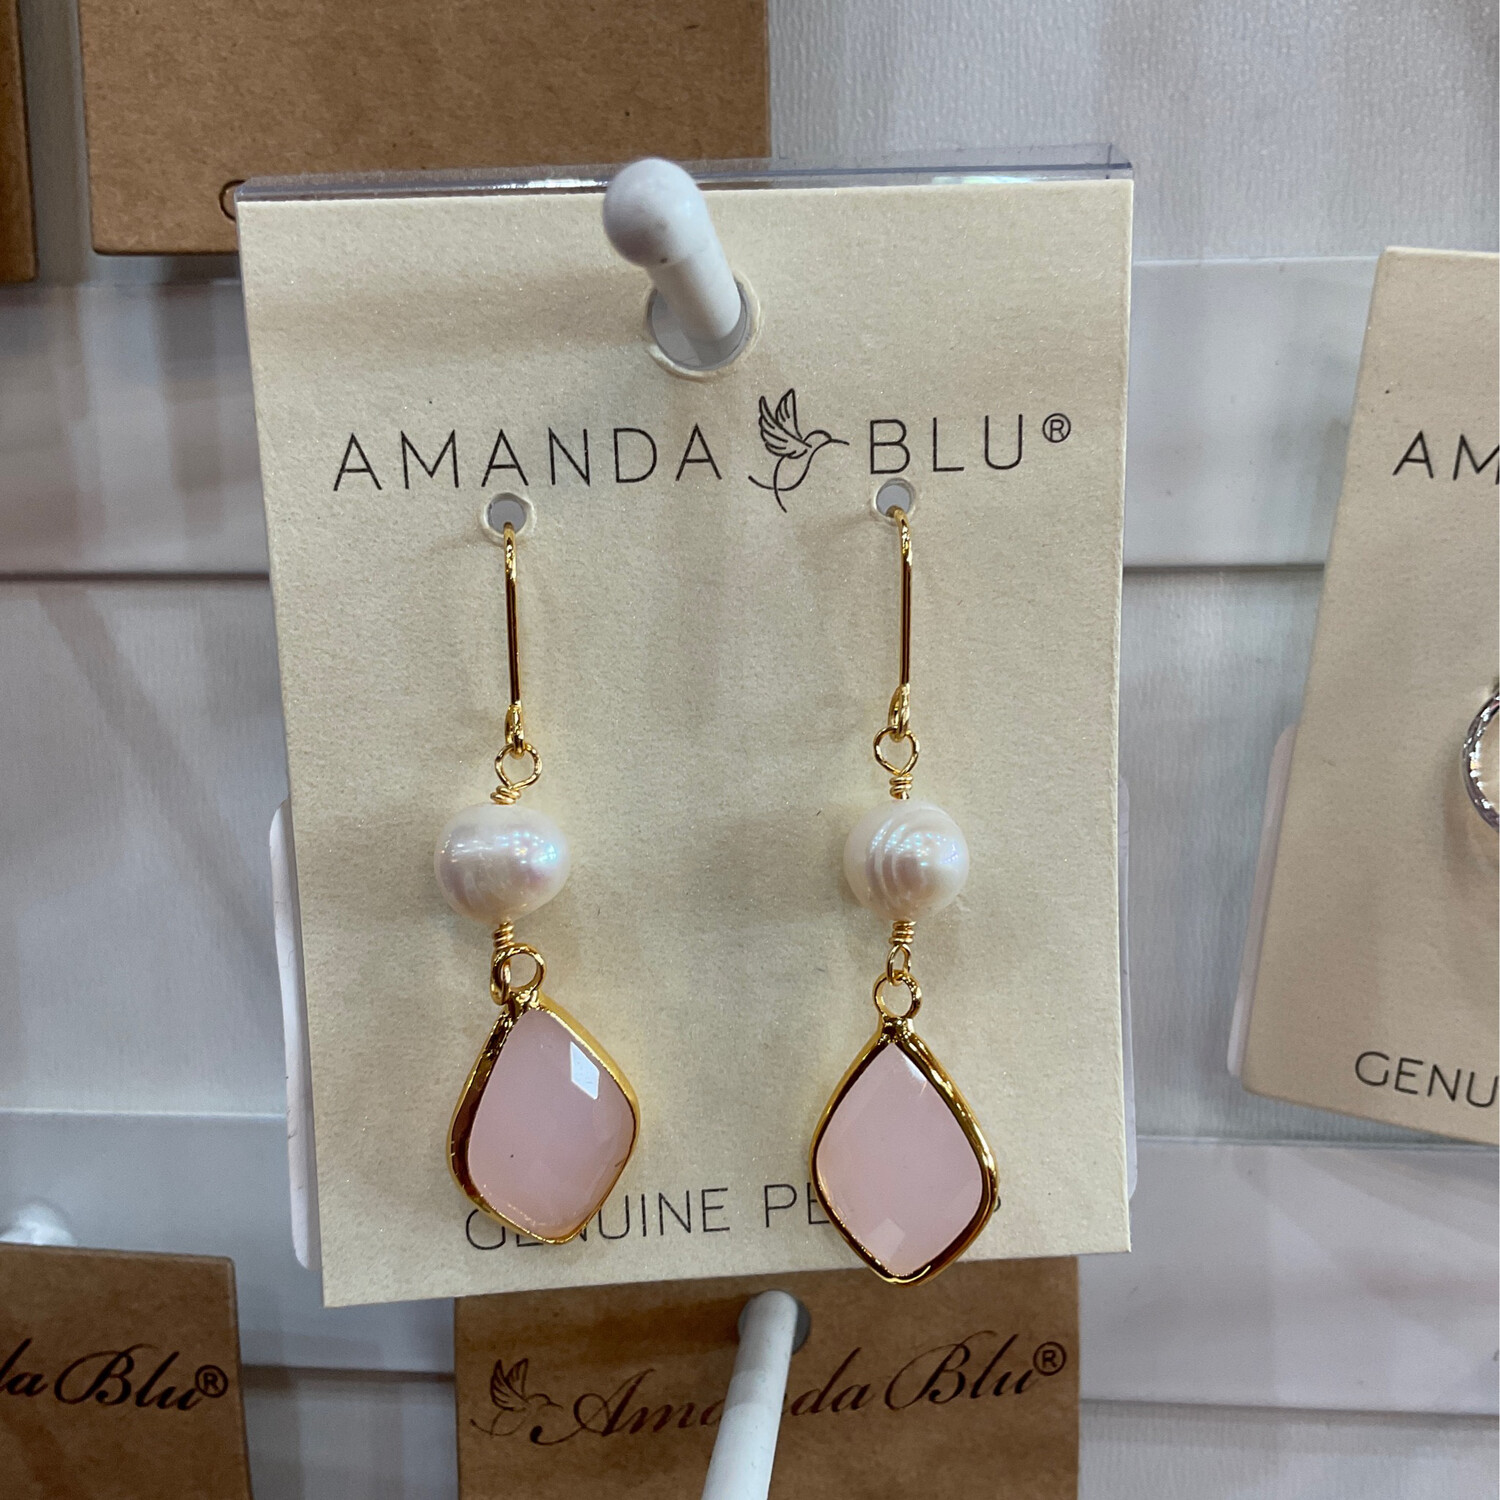 Amanda Blu 1485 Solitaire Pearl Drop Earrings Gold/Blush 